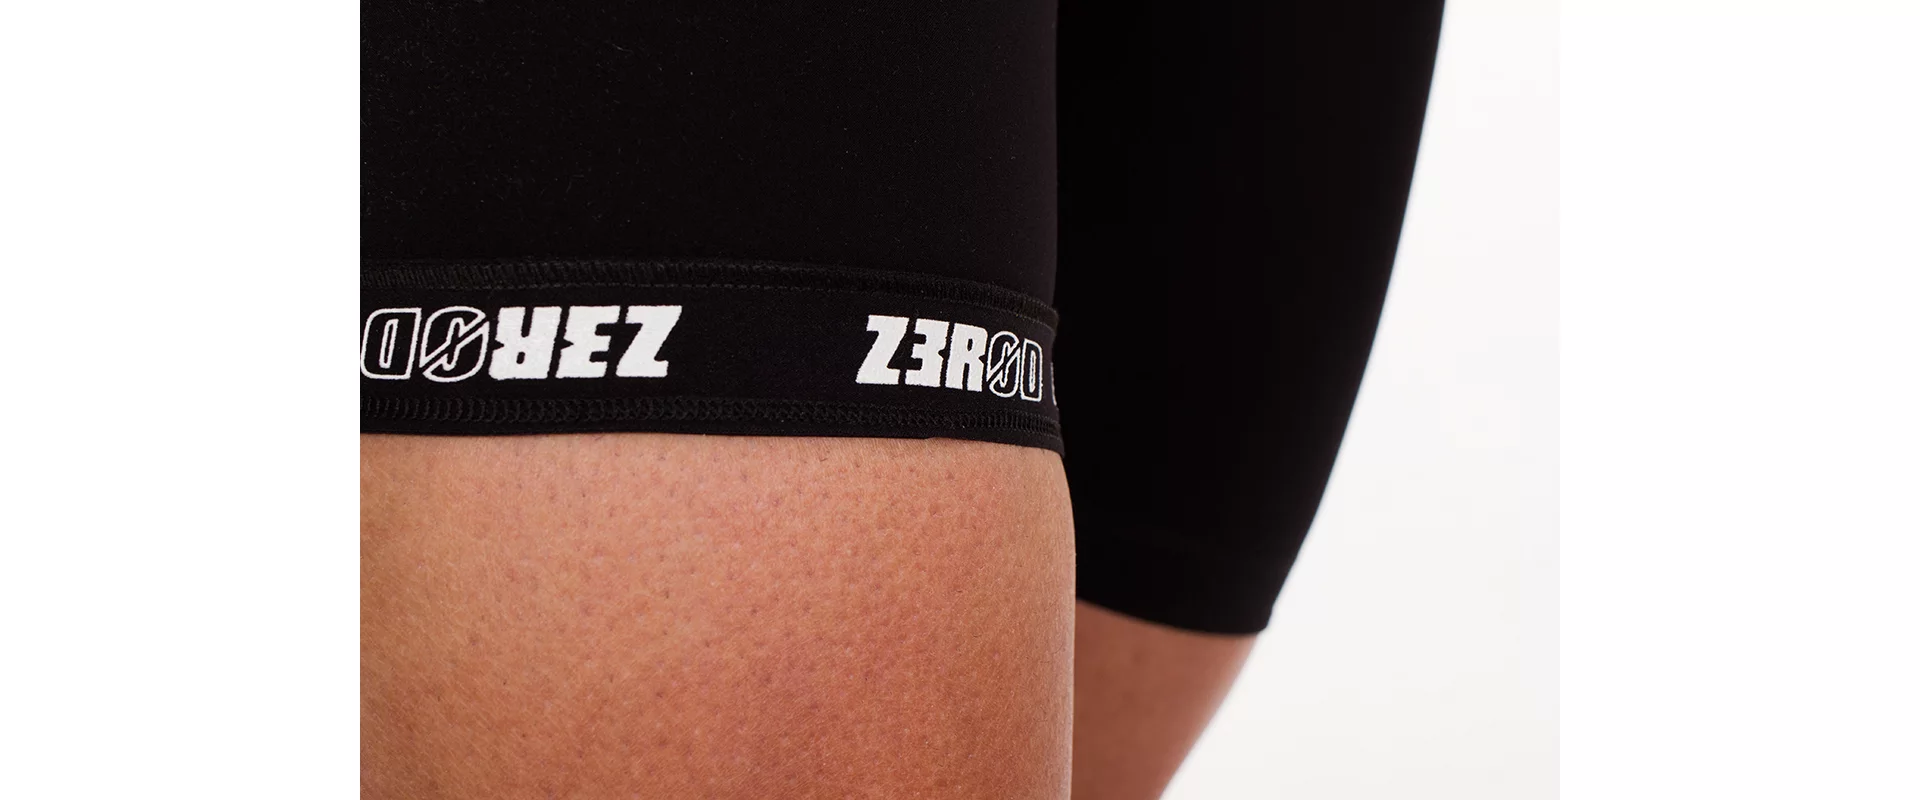 Z3R0D Elite Trisuit Black / Мужской стартовый костюм без рукавов фото 5